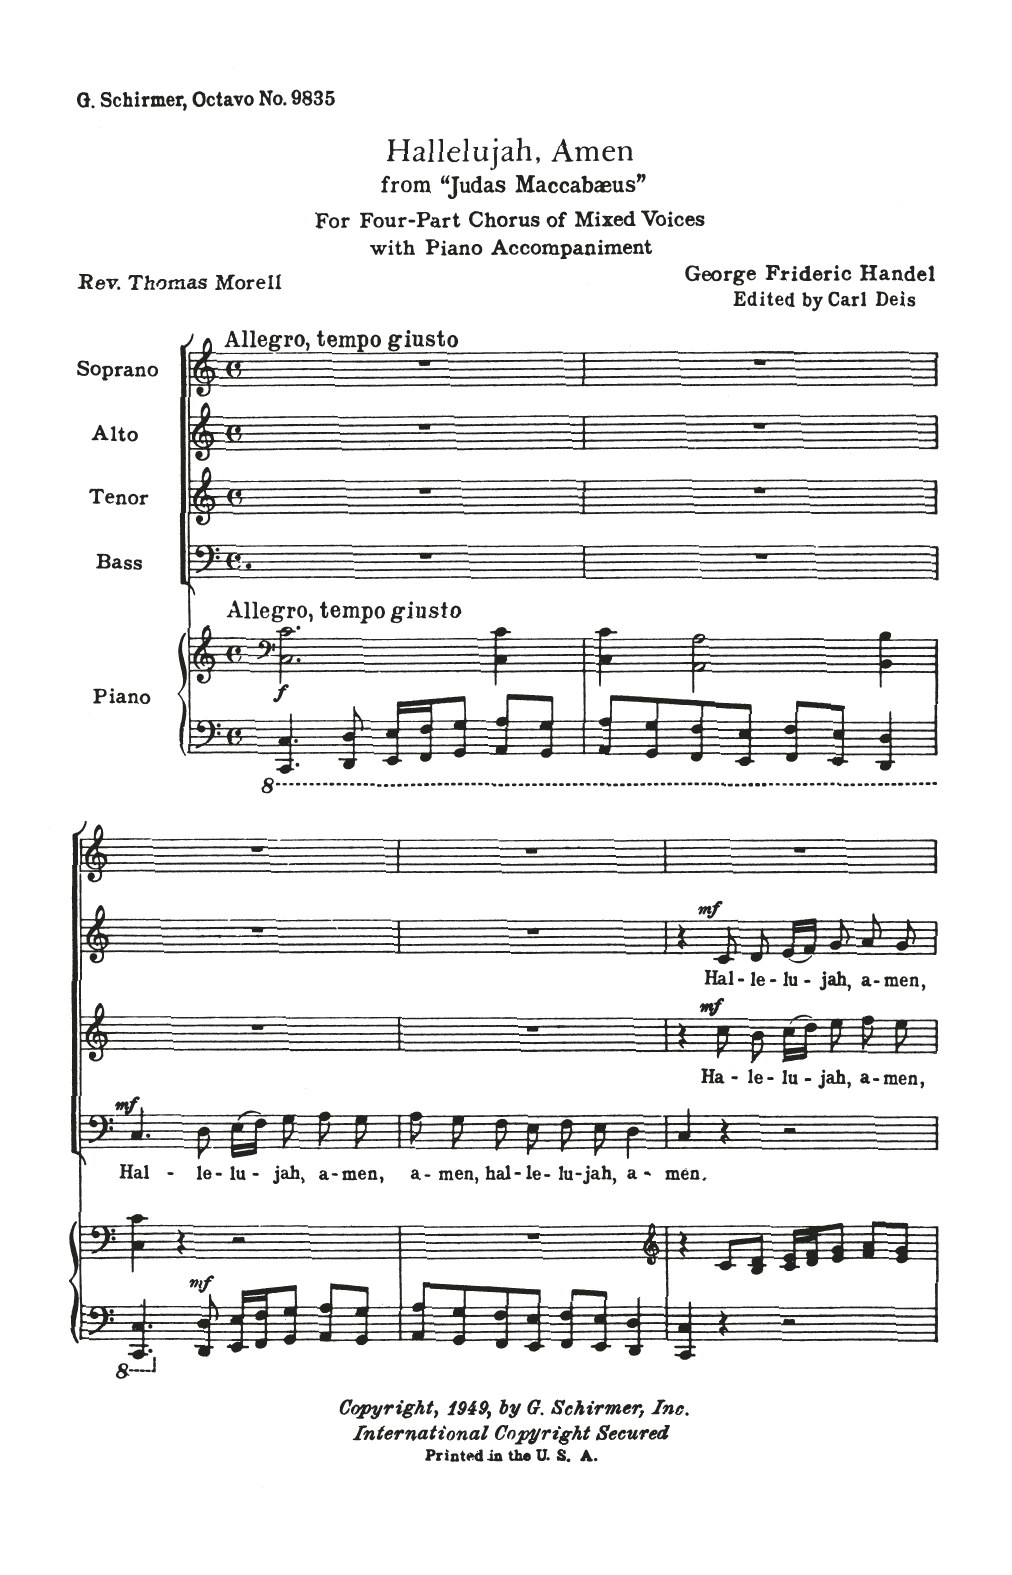 George Frideric Handel Hallelujah, Amen (from Judas Maccabaeus) Sheet Music Notes & Chords for SATB Choir - Download or Print PDF